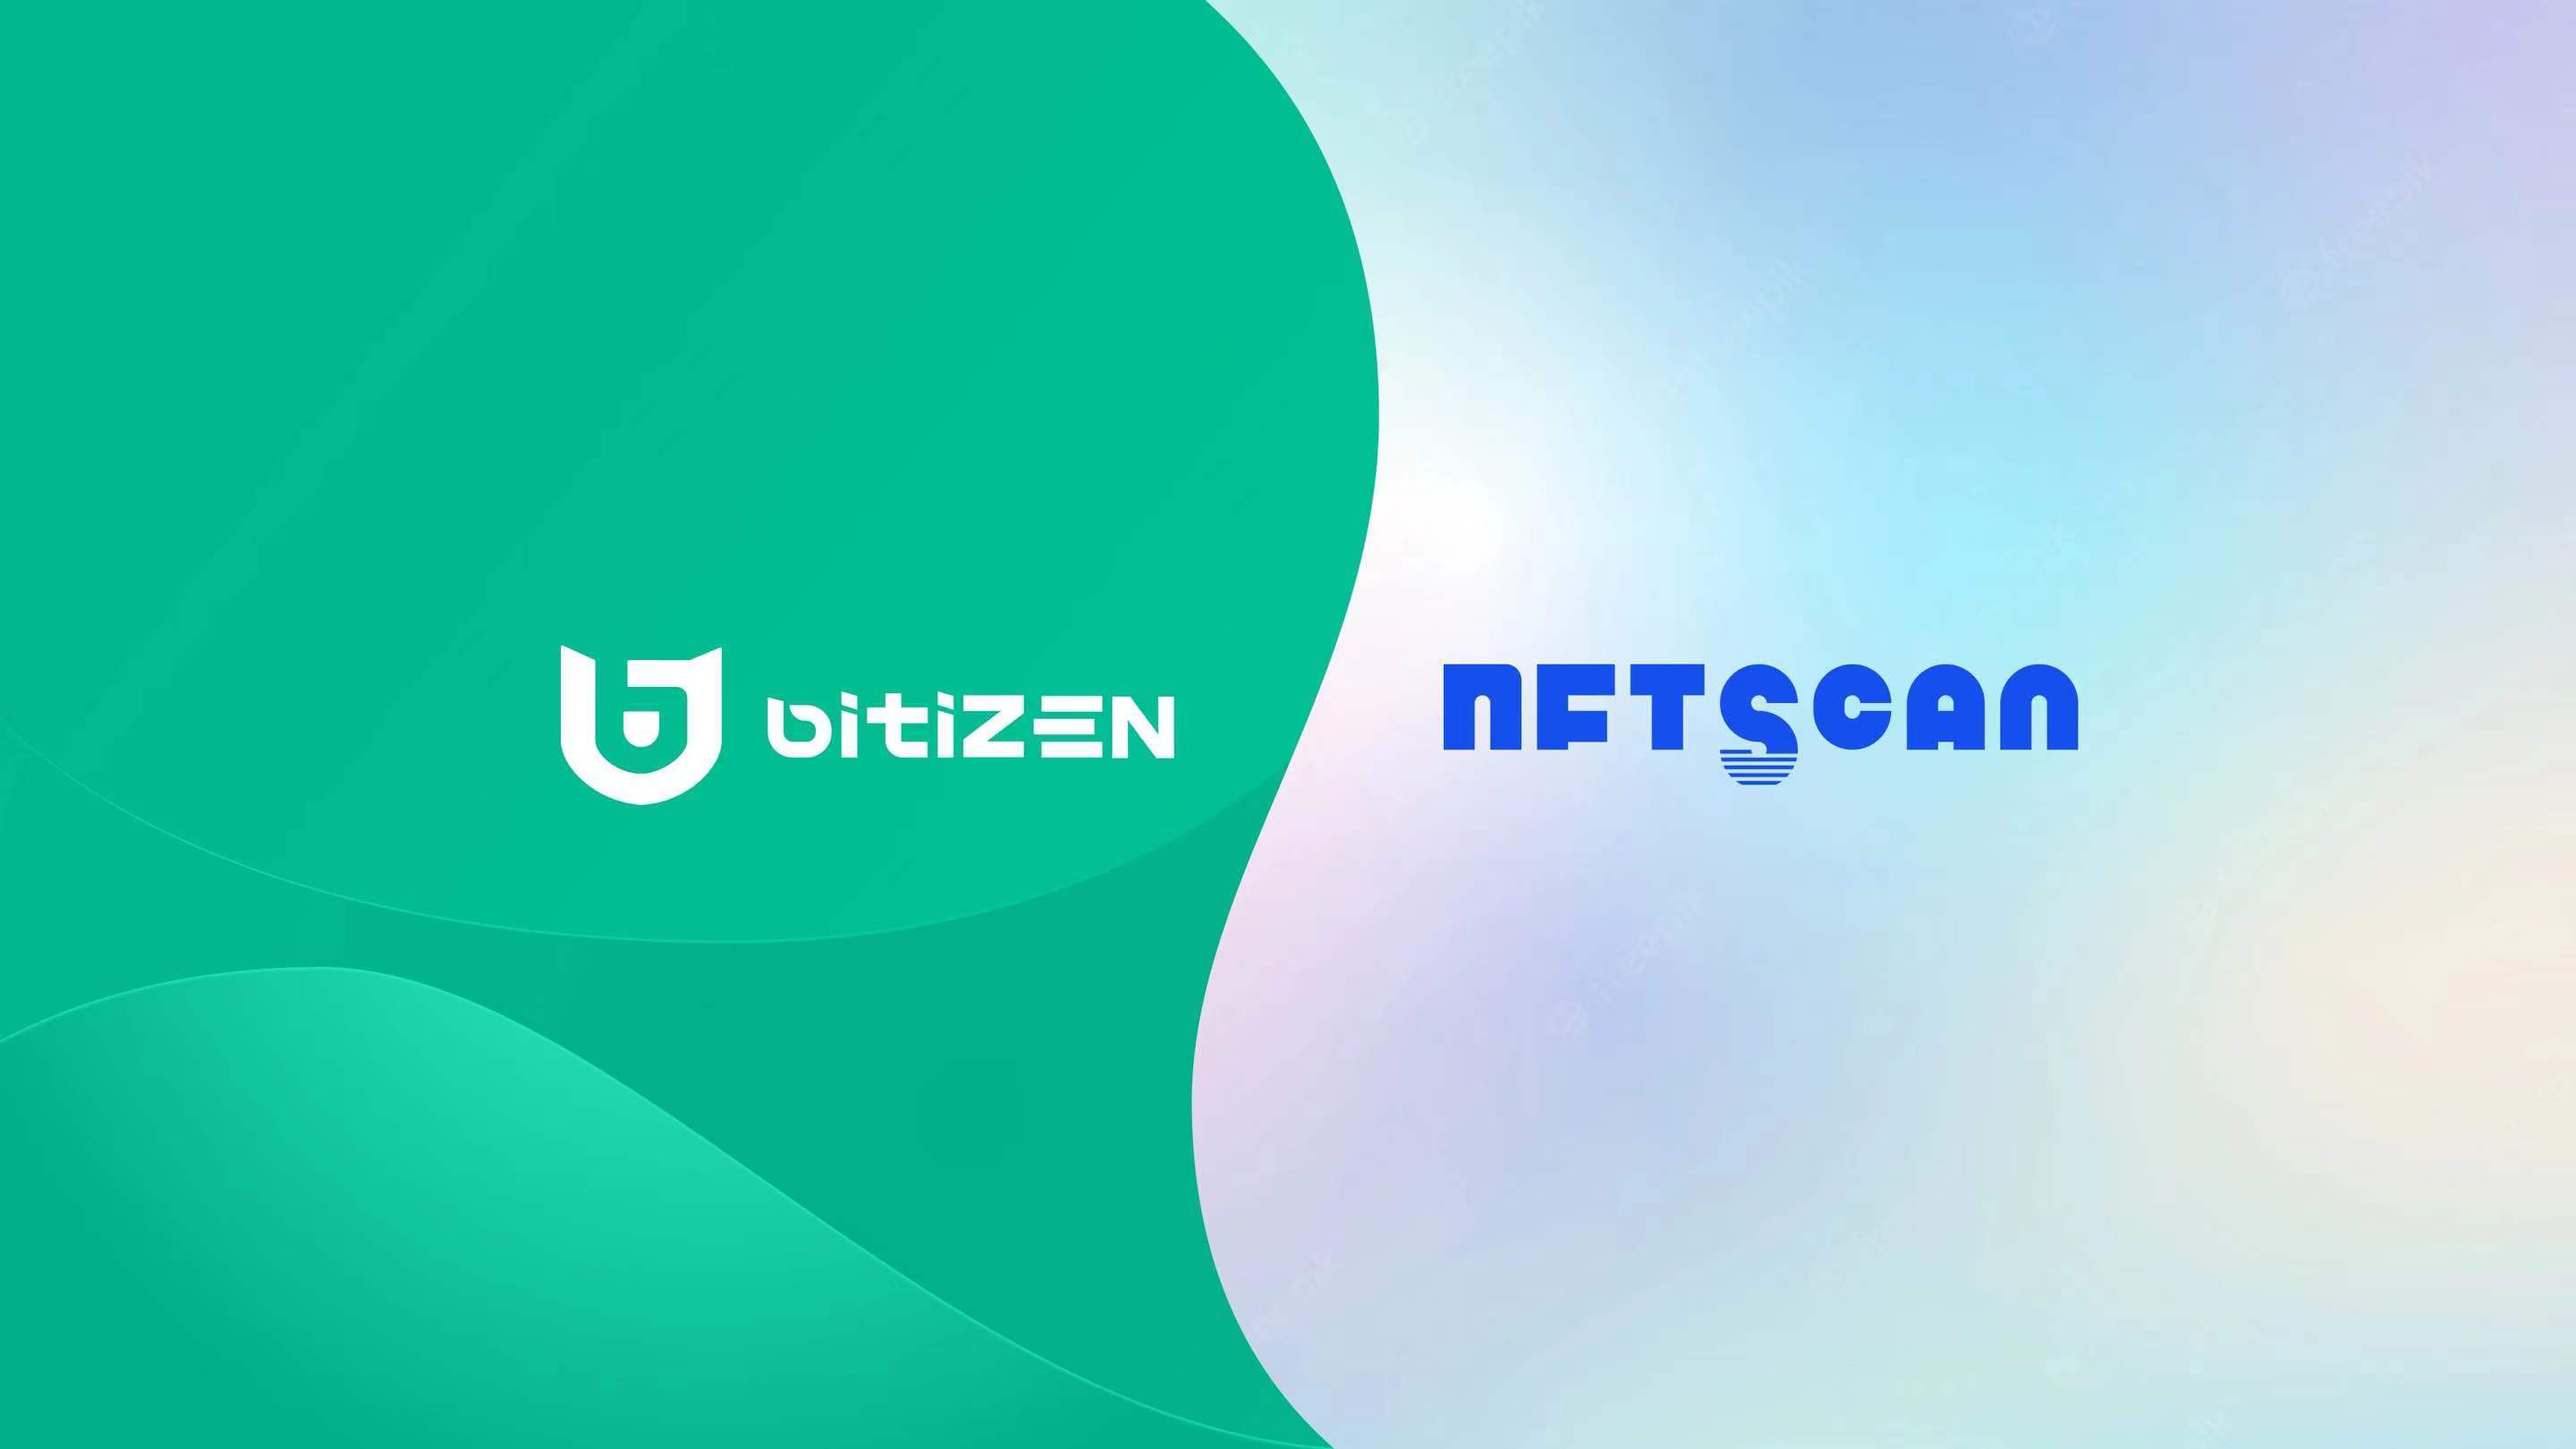 NFTScan 与 Bitizen 钱包达成战略合作，双方将在 NFT 数据层面进行深度合作